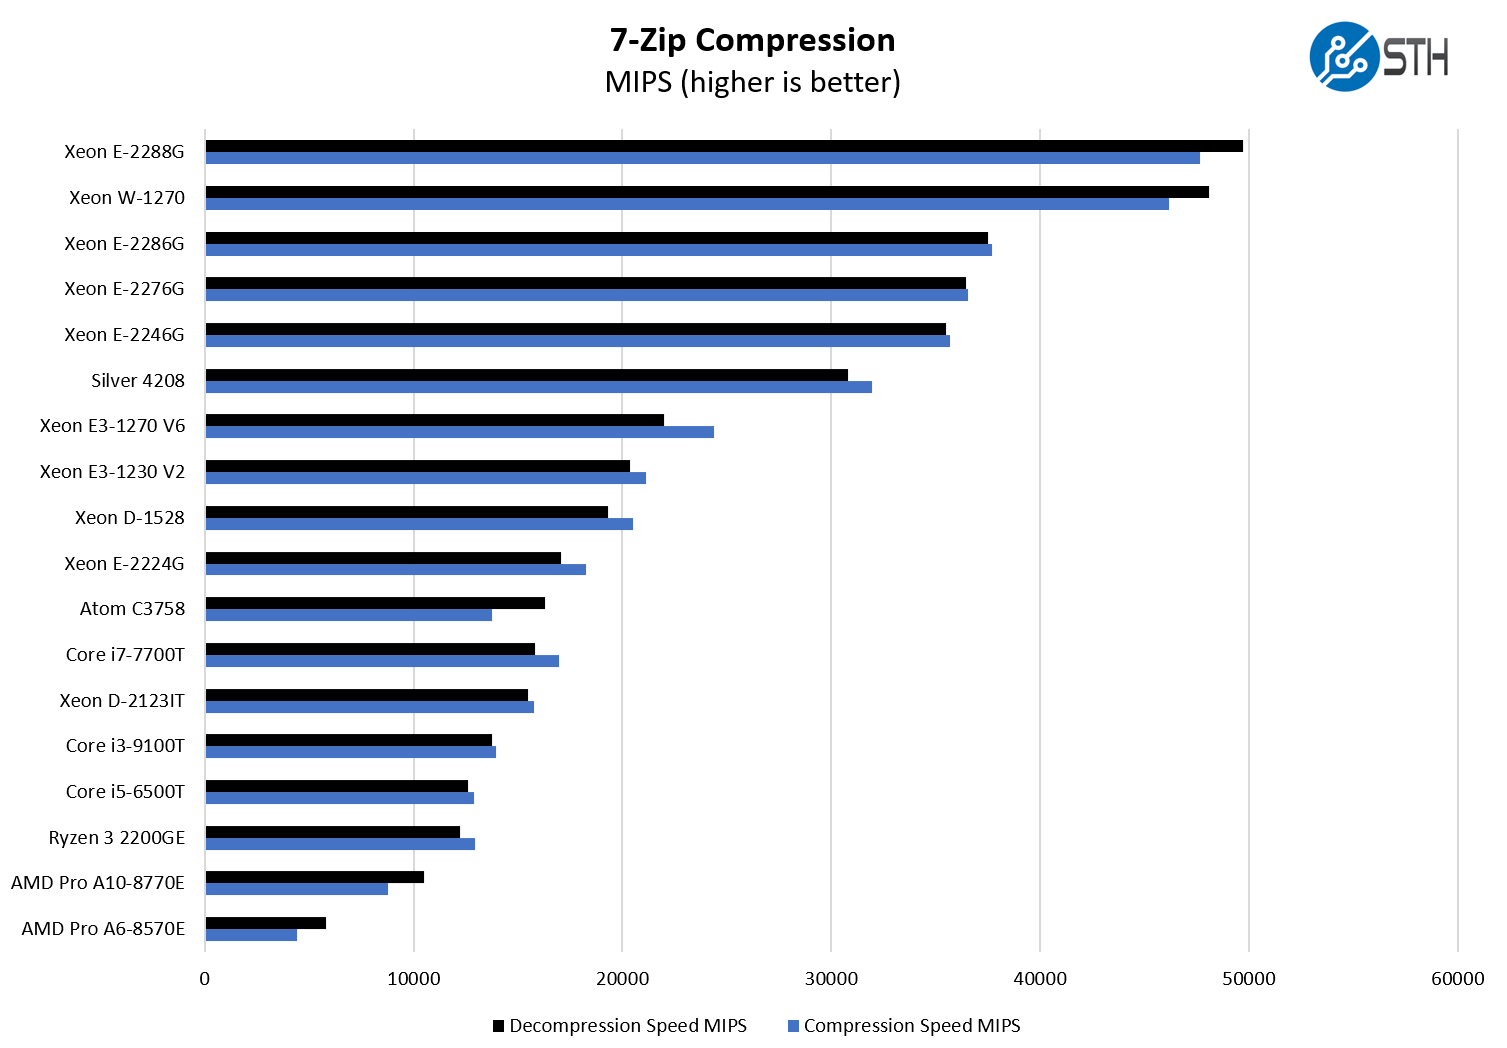 Supermicro X12SAE Xeon W 1270 7zip Compression Benchmarks